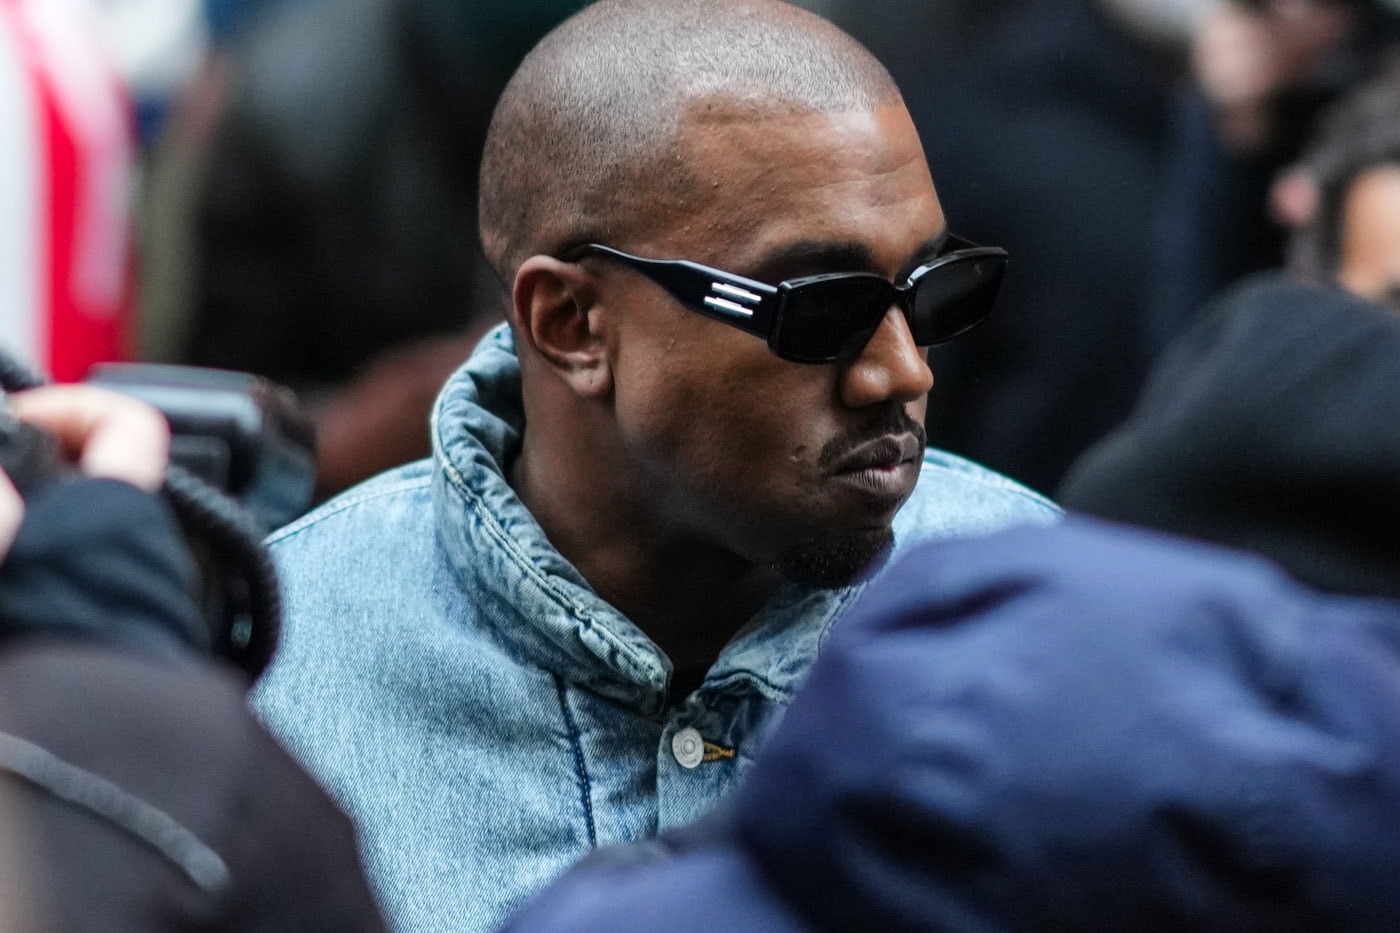 Kanye West's Grammys Performance Has Officially Been Canceled donda 2 erratic pete davidson trevor noah concerning online behaviour rapper donda 2 hip hop ye yeezy gap balenciaga julia fox kim kardashian